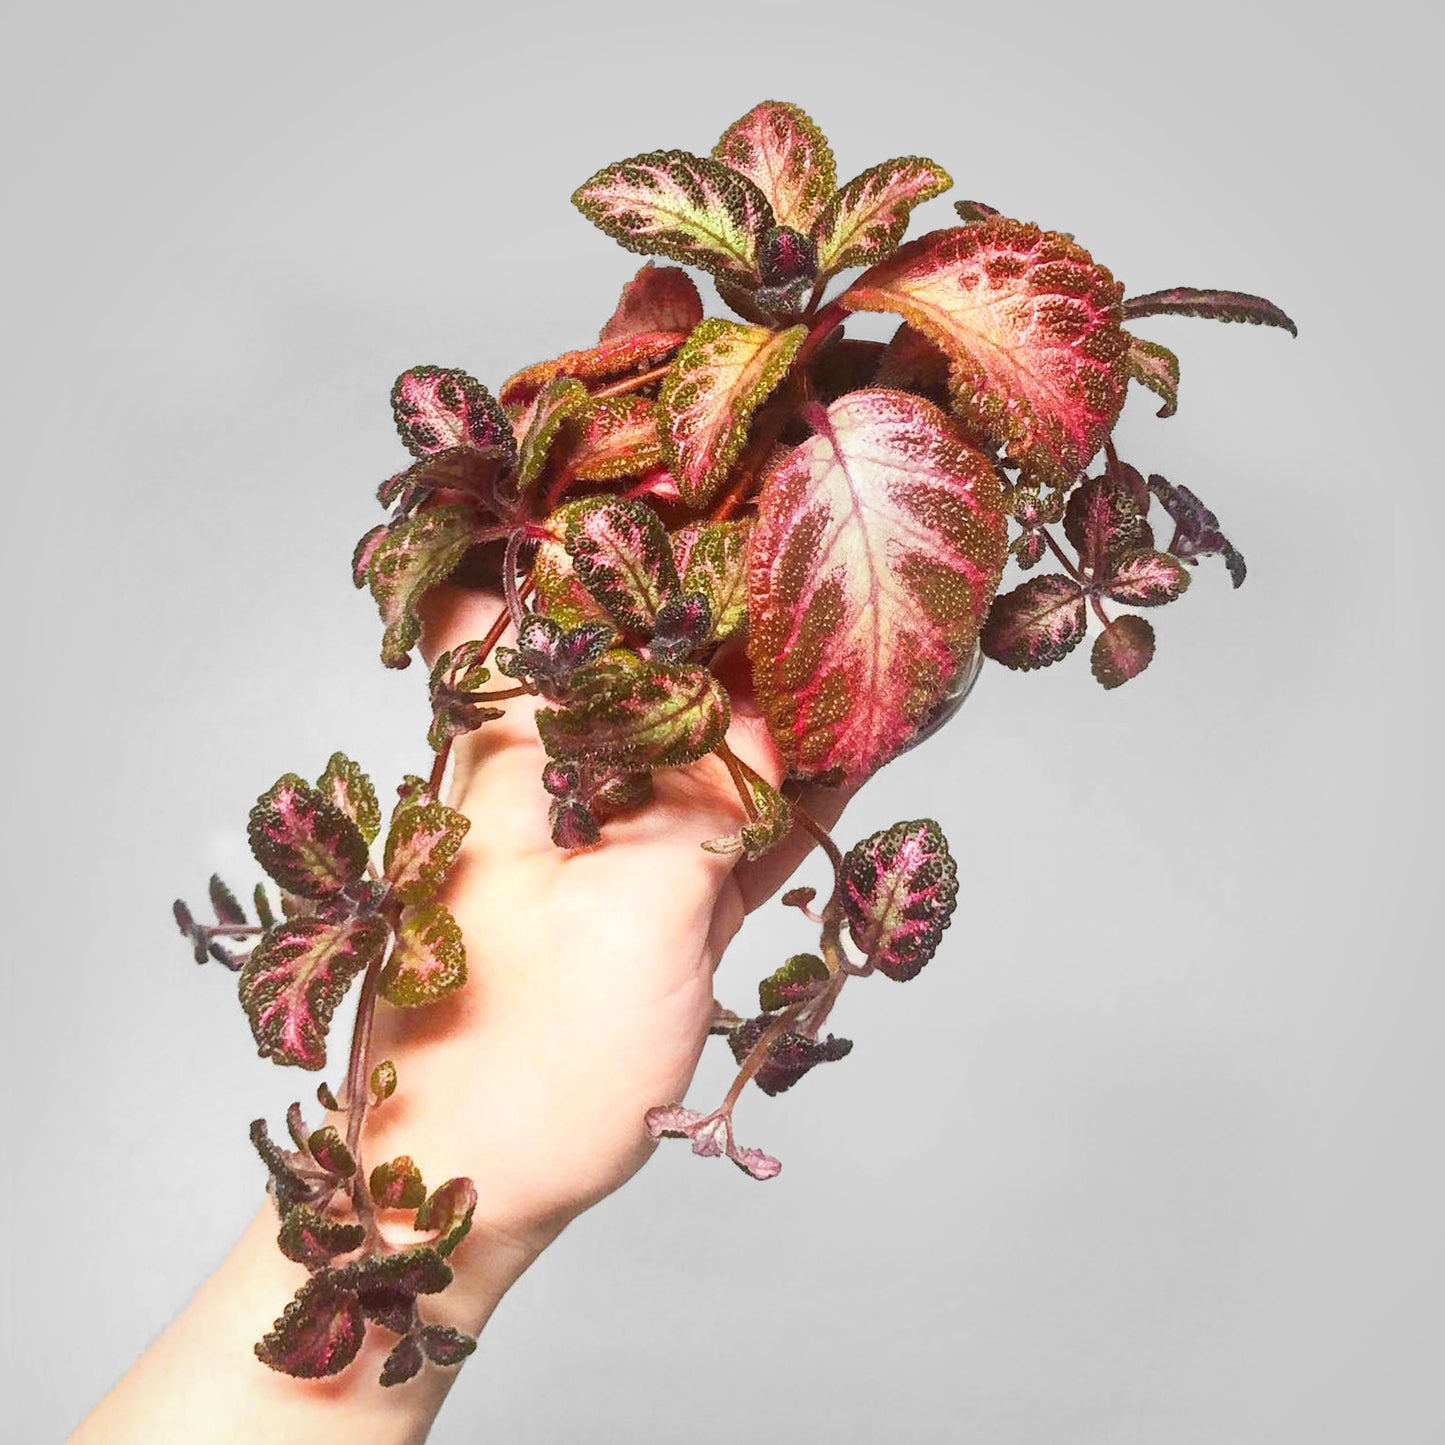 Episcia Pink Acajou Starter Plant Flame Violet Terrarium Culture